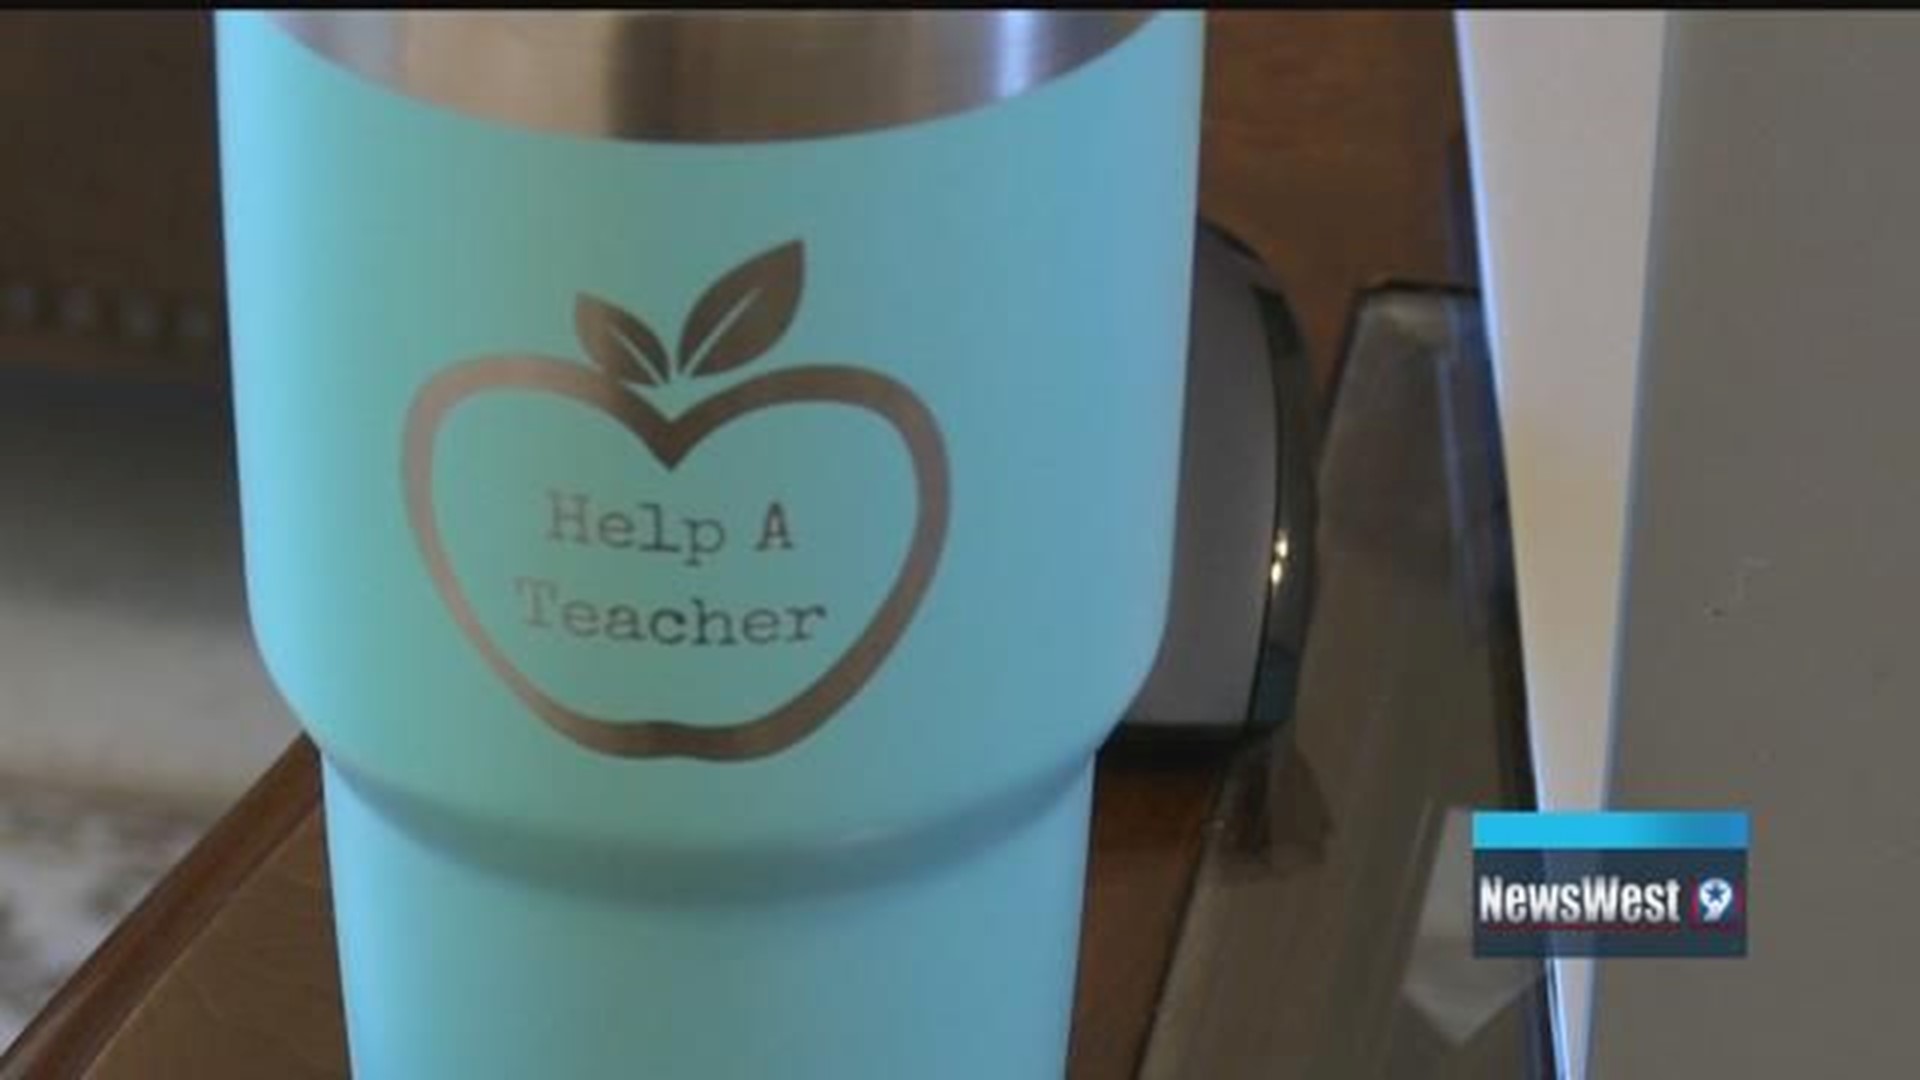 Midland woman creates organization to provide school supplies for teachers